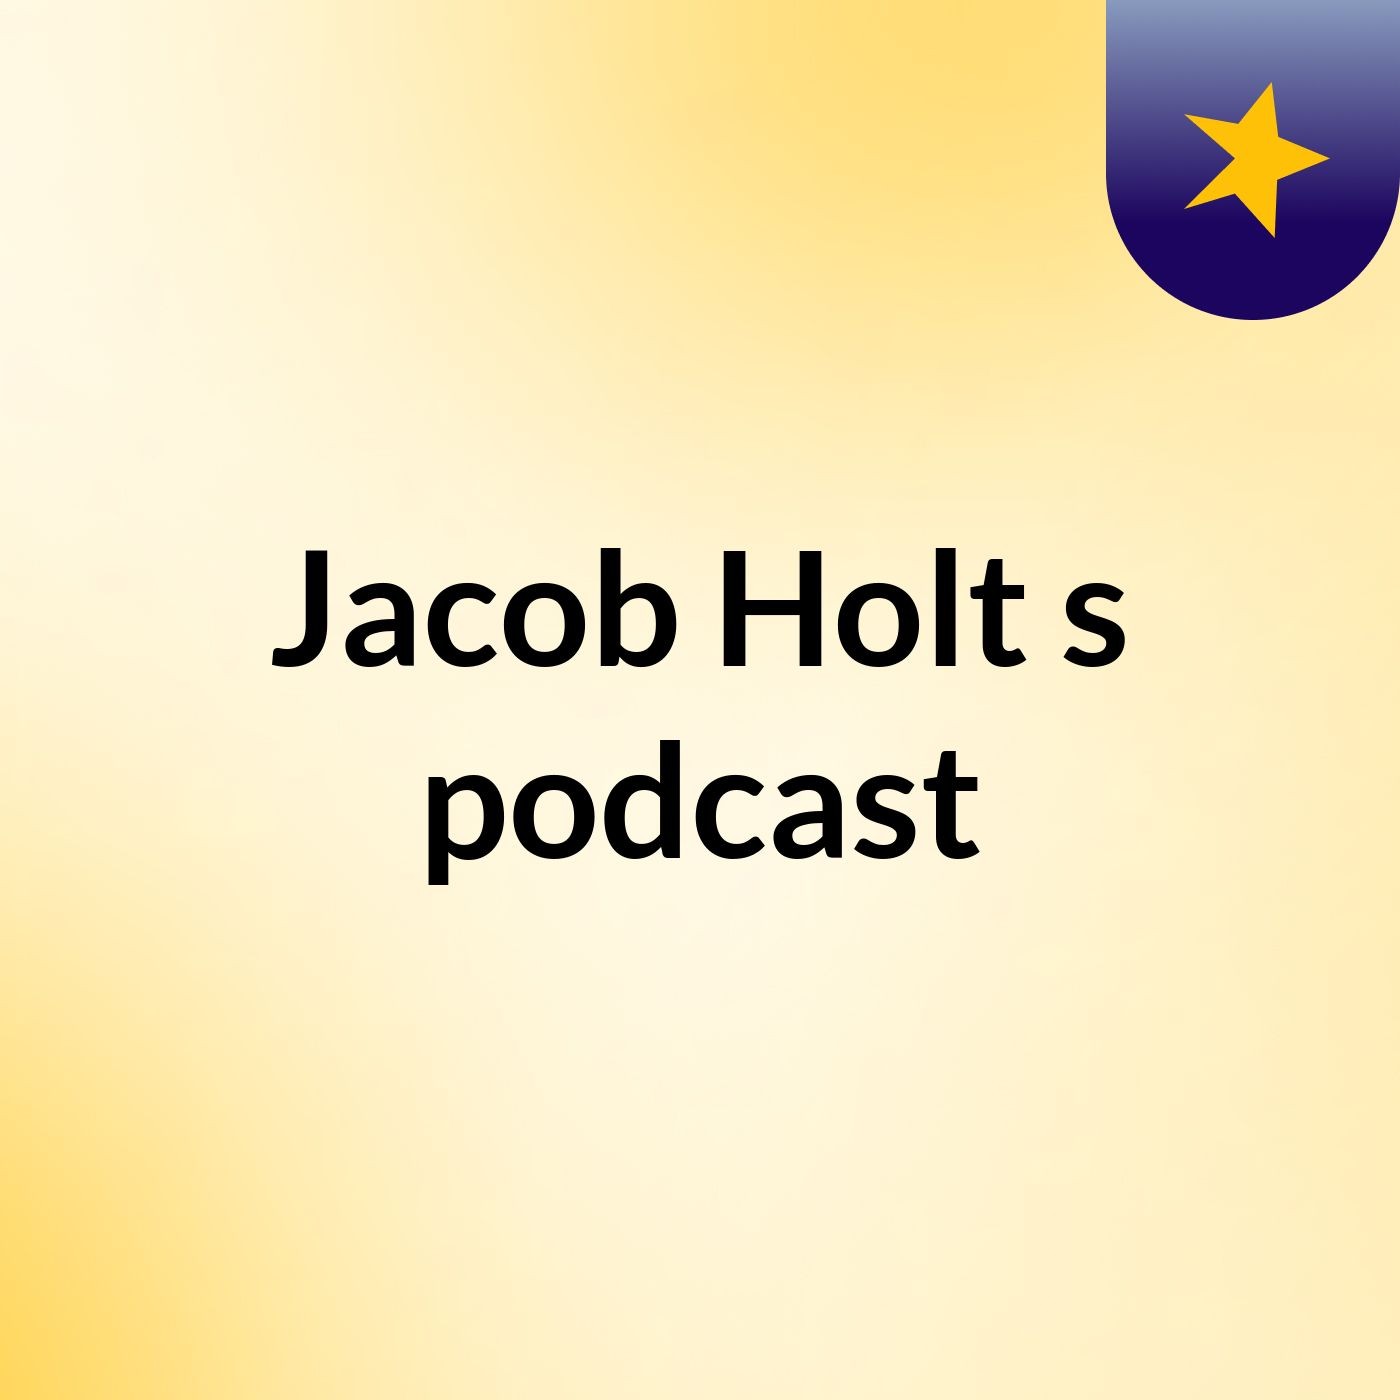 Jacob Holt's podcast